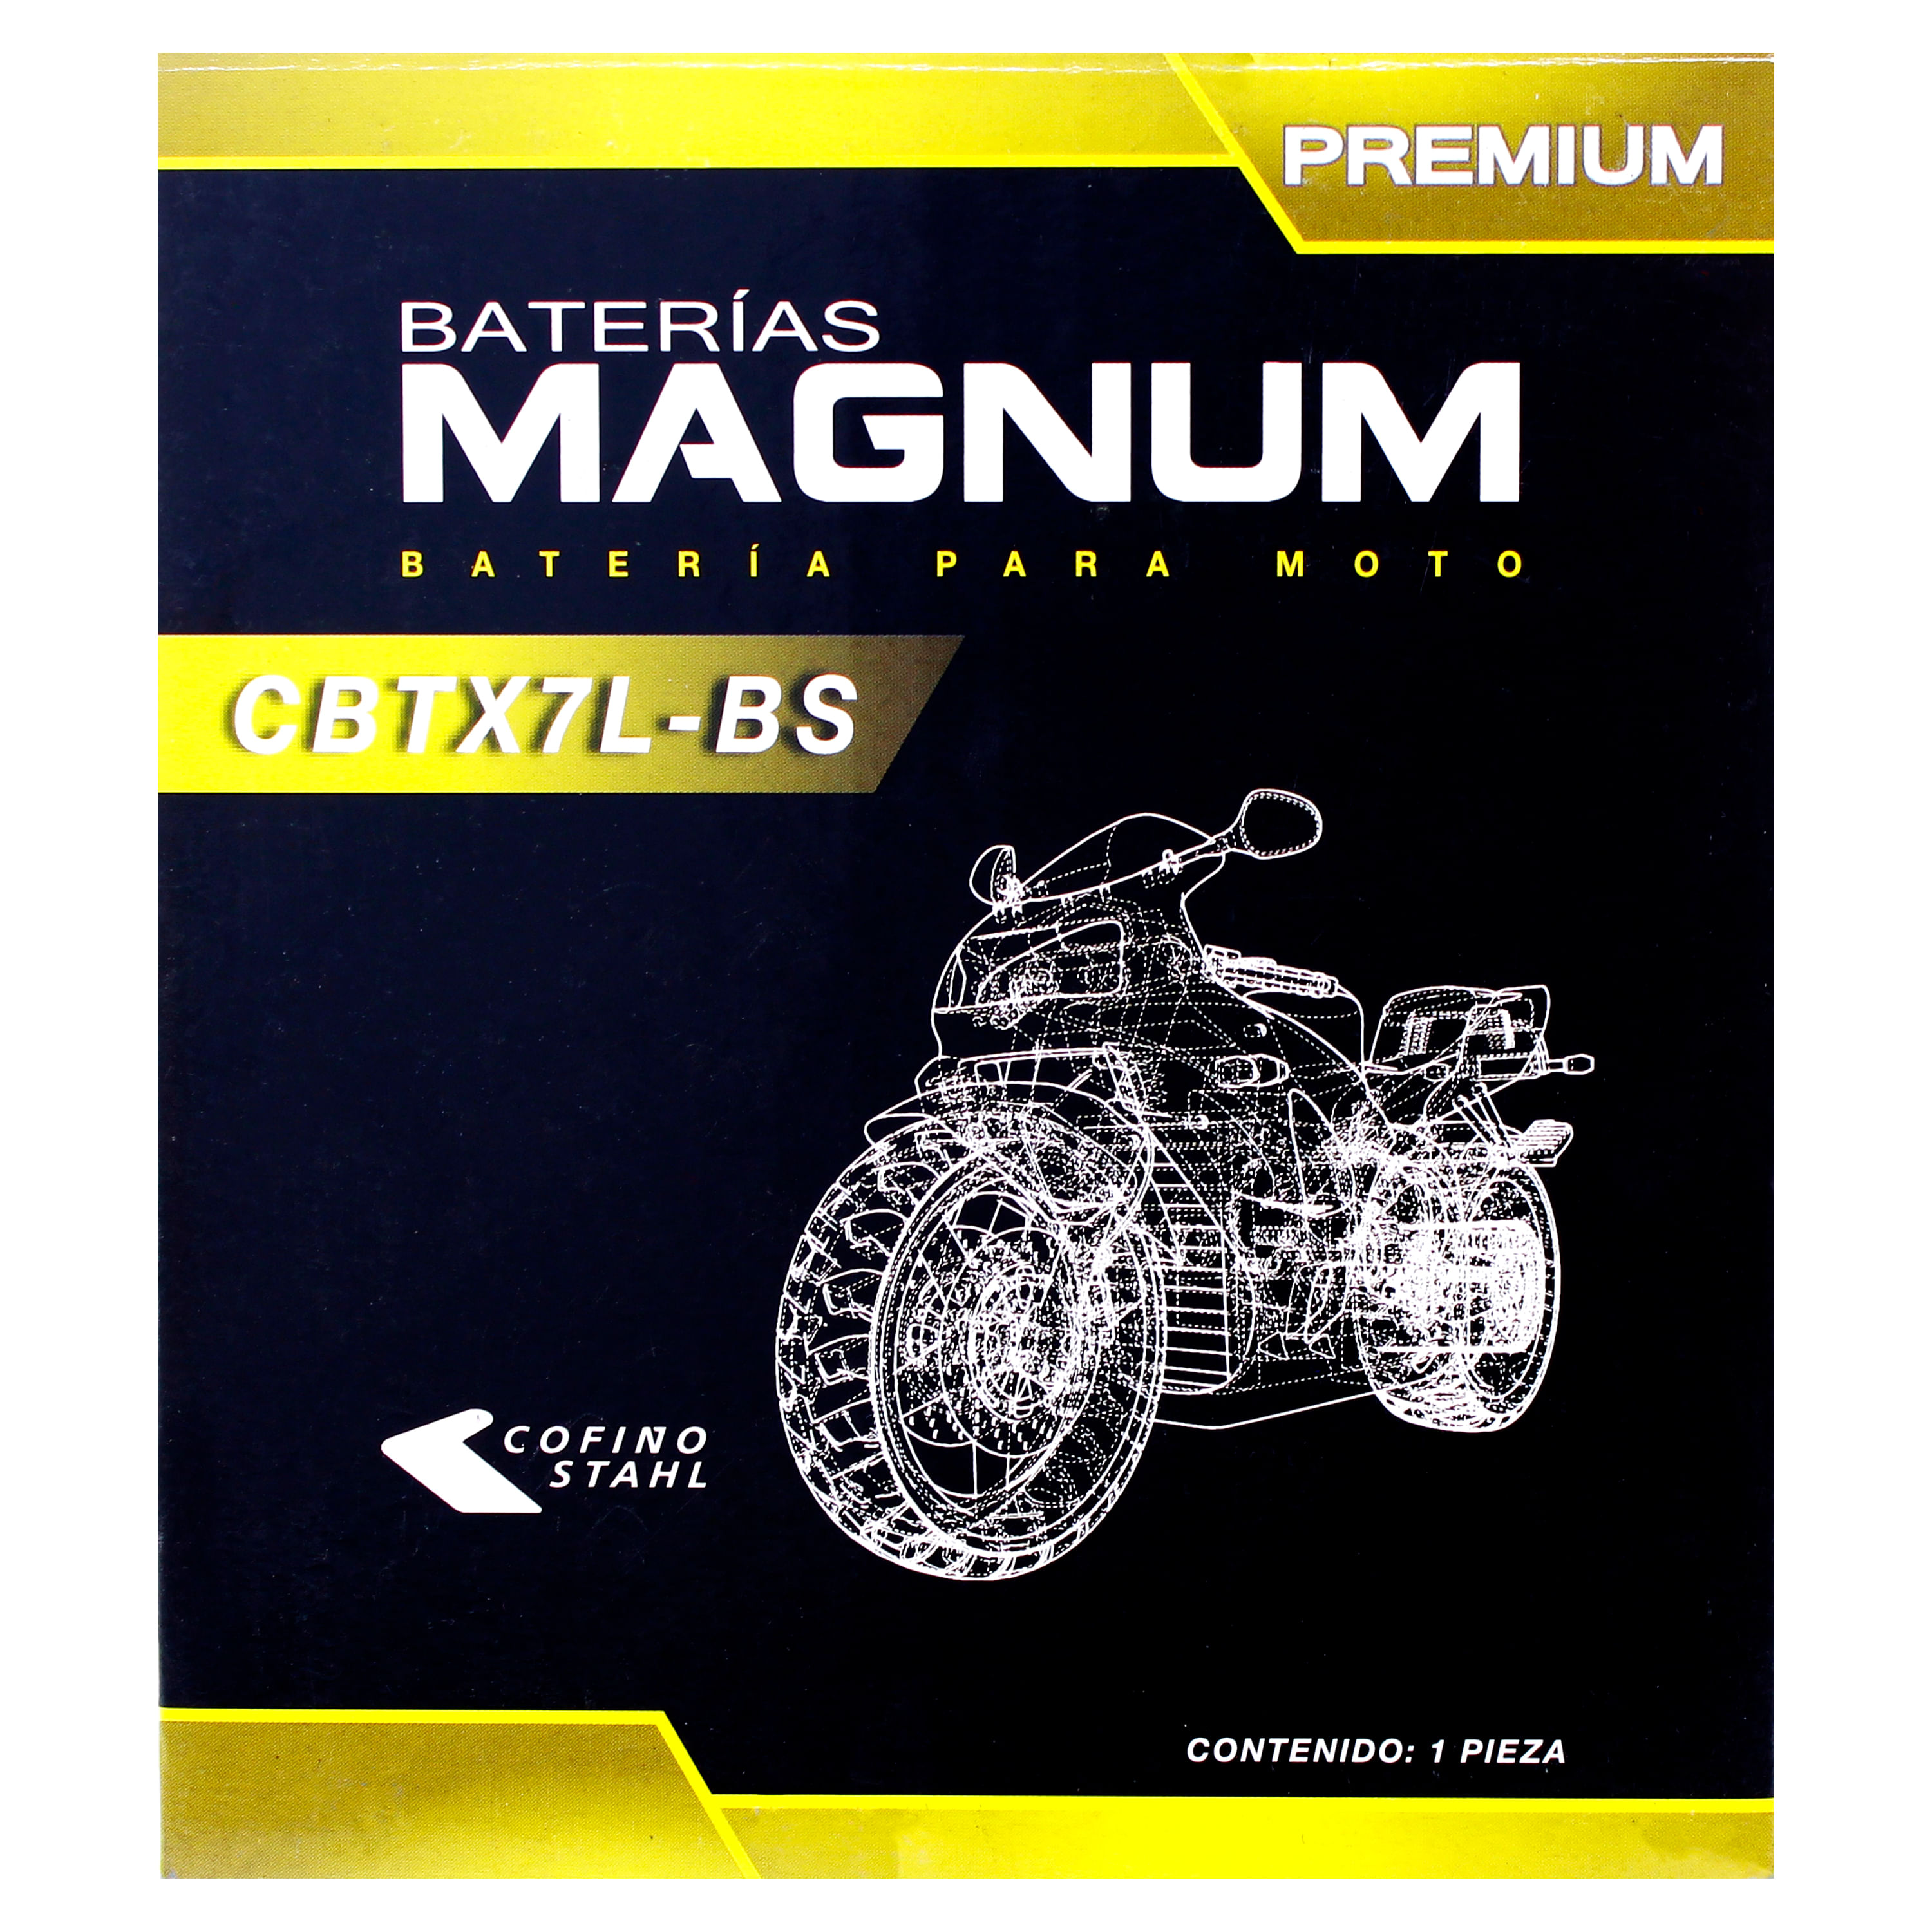 Batería De Moto Btx7A-Bs Magnum - Cemaco